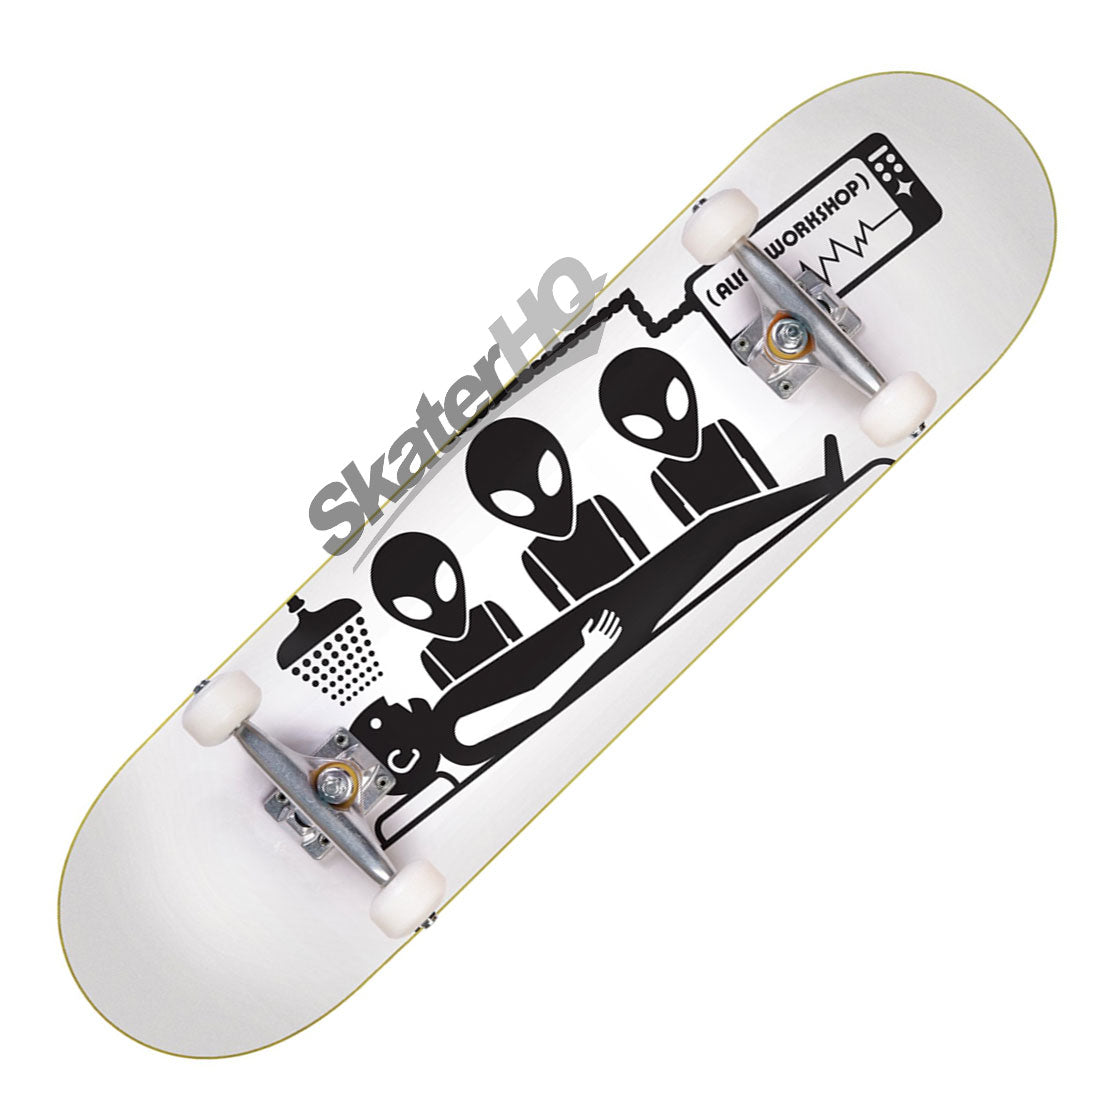 Alien Workshop Abduction 7.75 Complete - White Skateboard Completes Modern Street